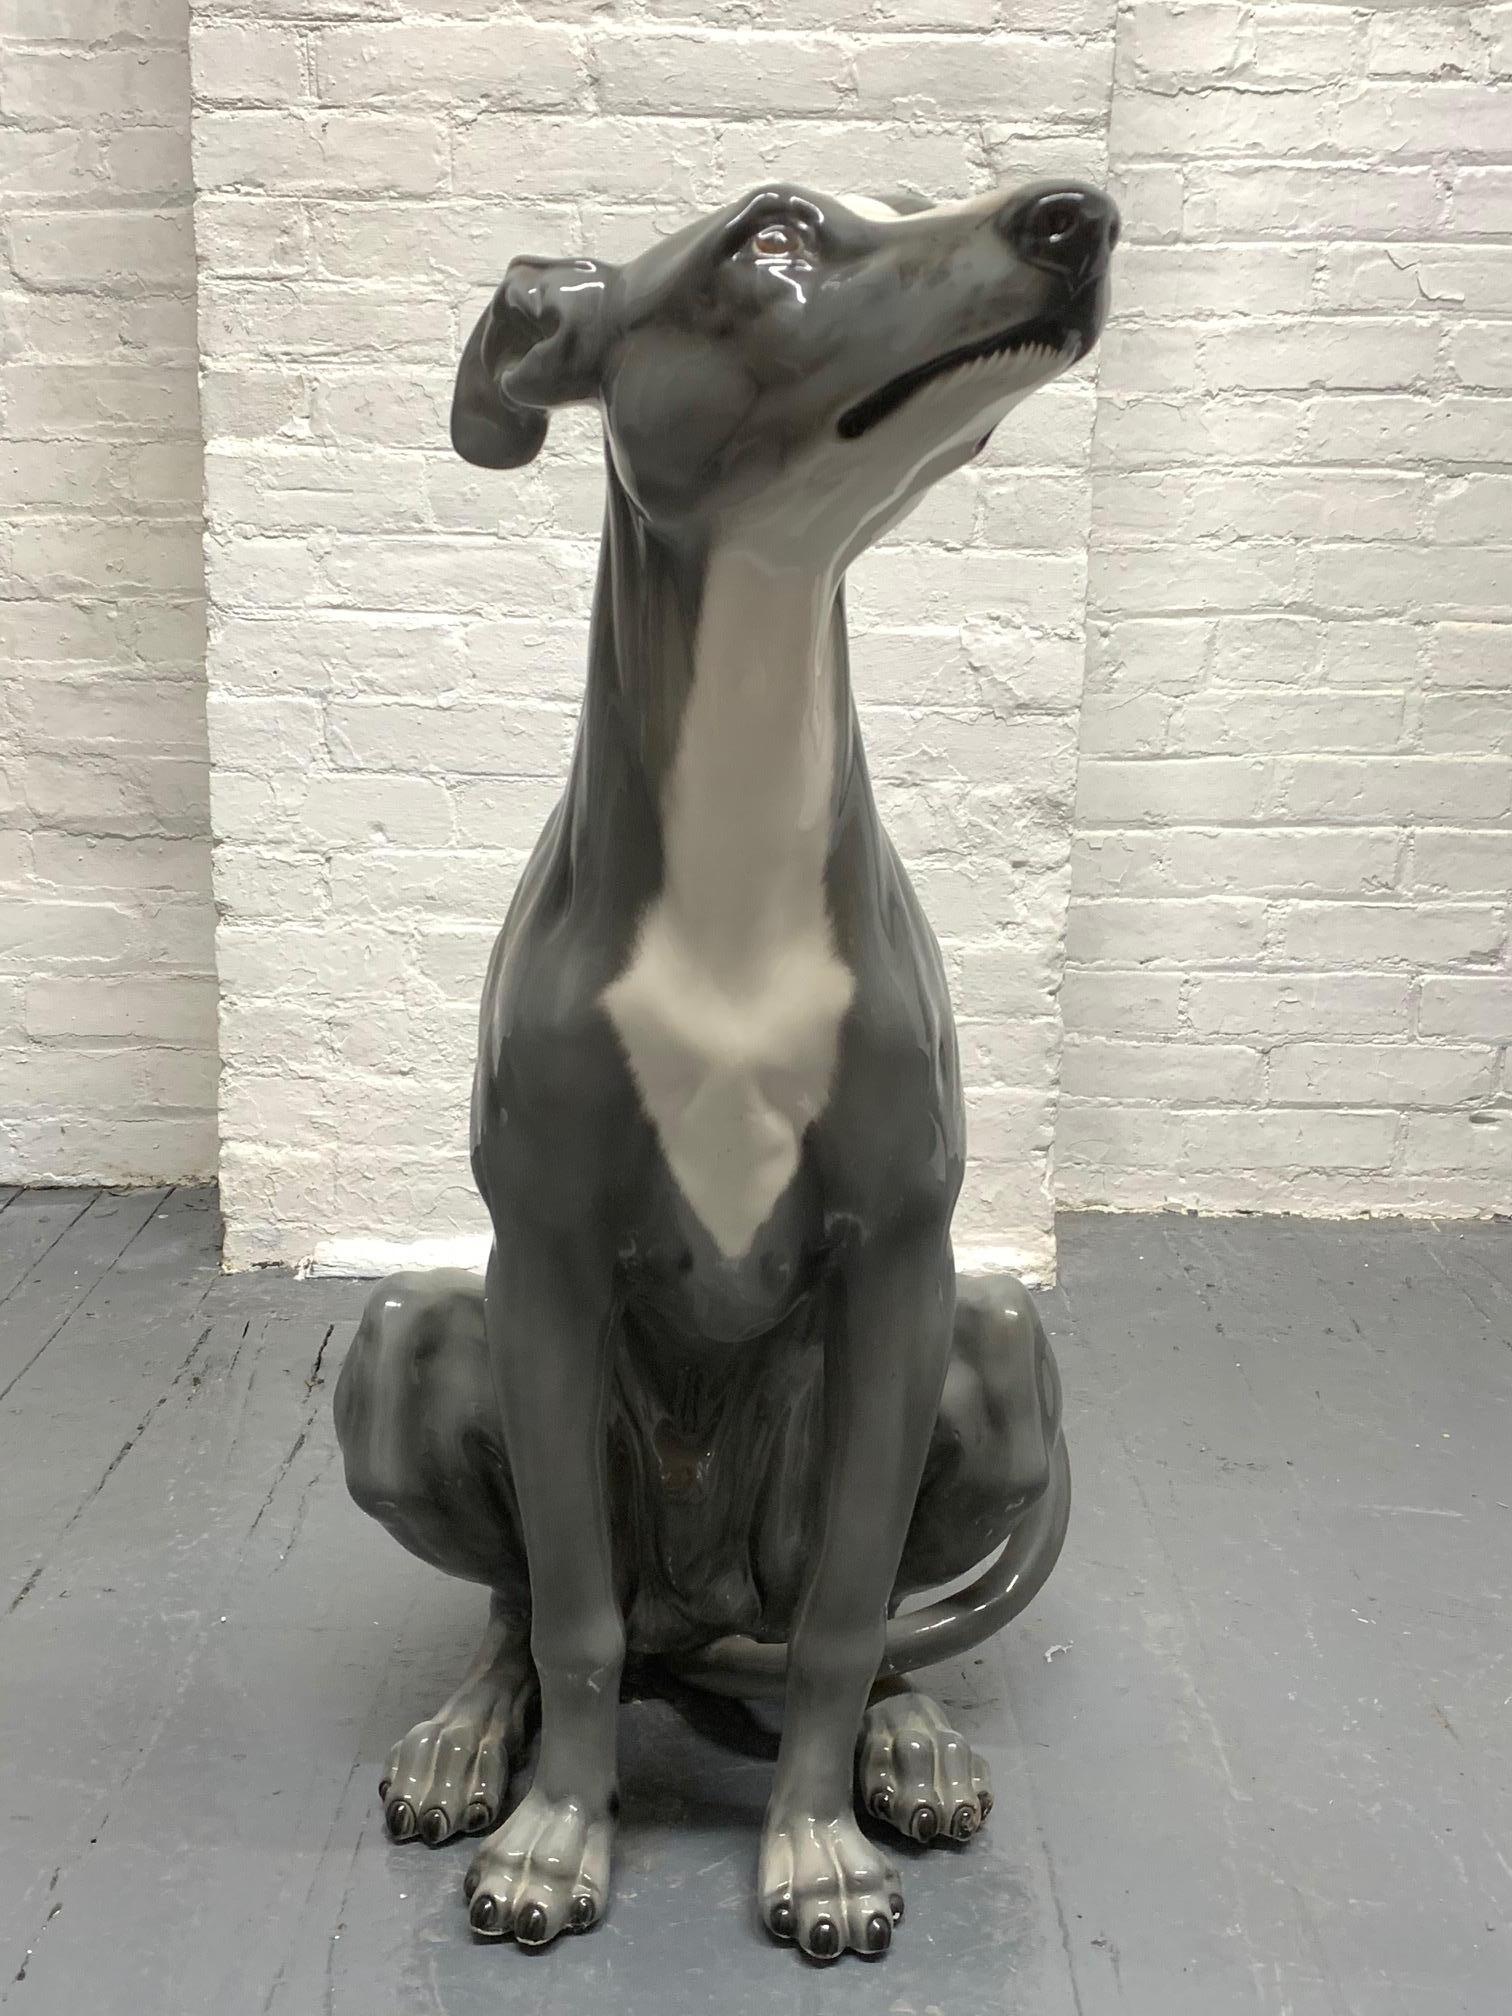 Glazed ceramic sculpture of a dog.